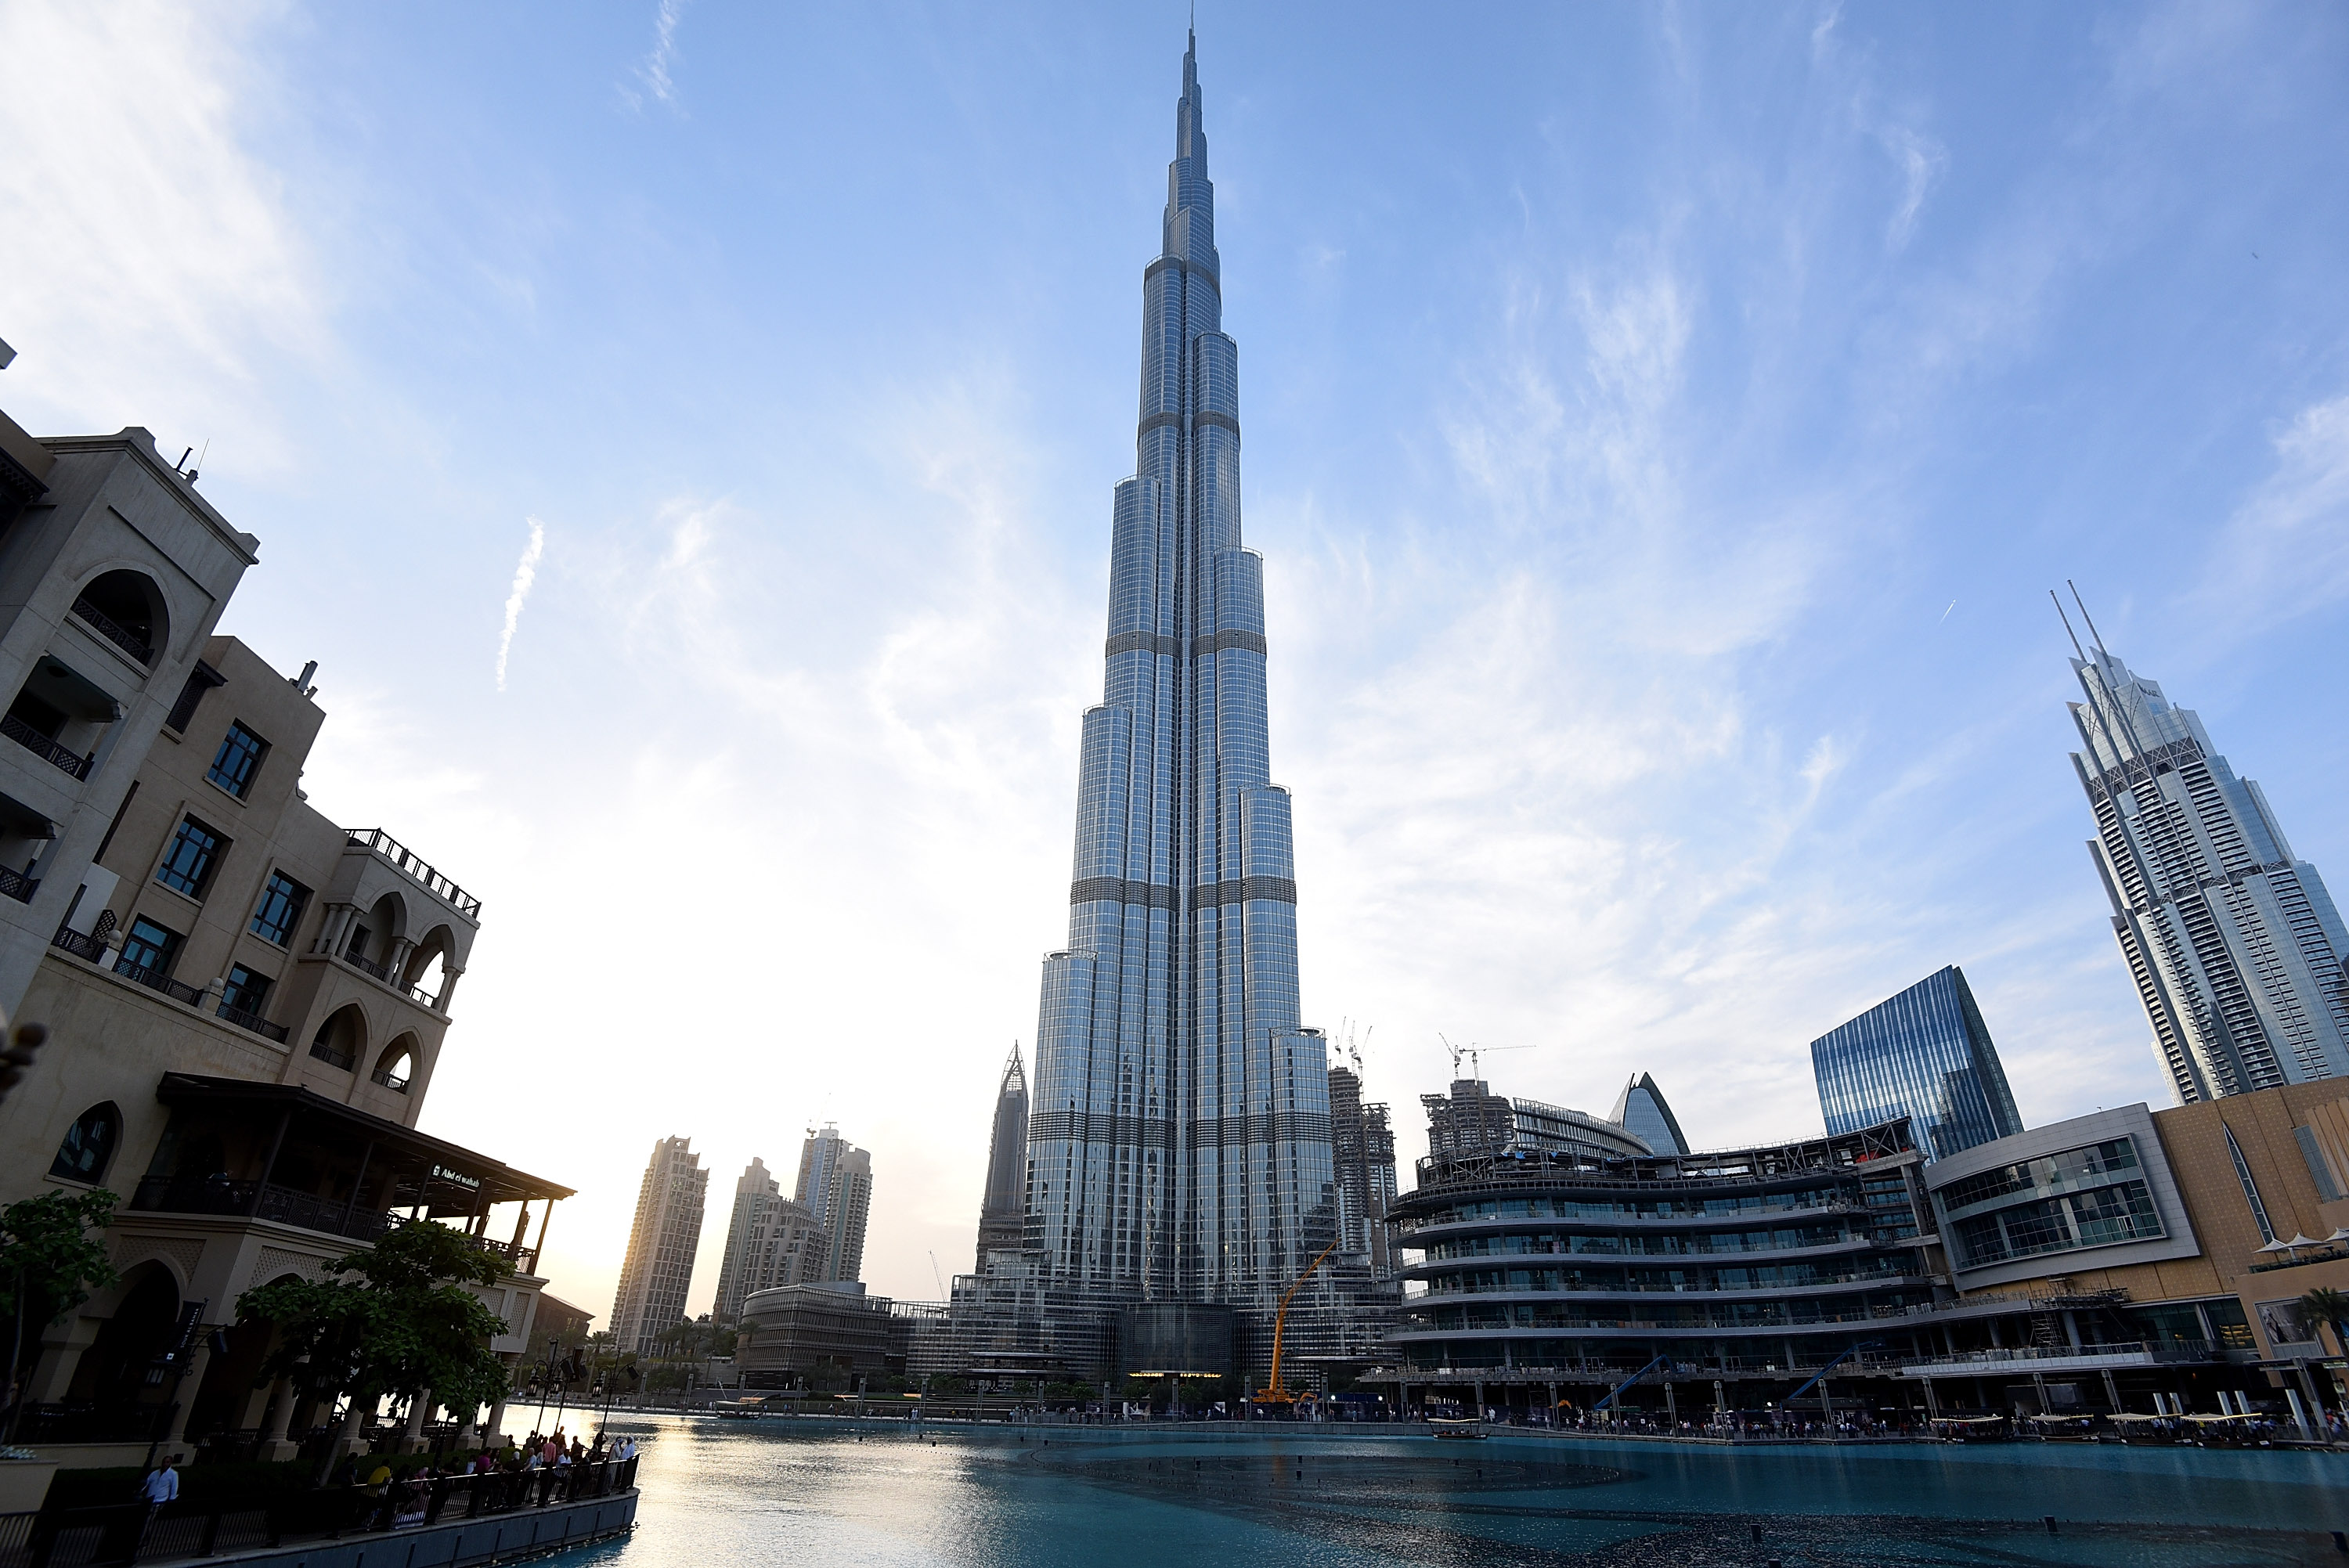 Dubai S Burj Khalifa A Look Inside The World S Tallest Building Cnn Travel